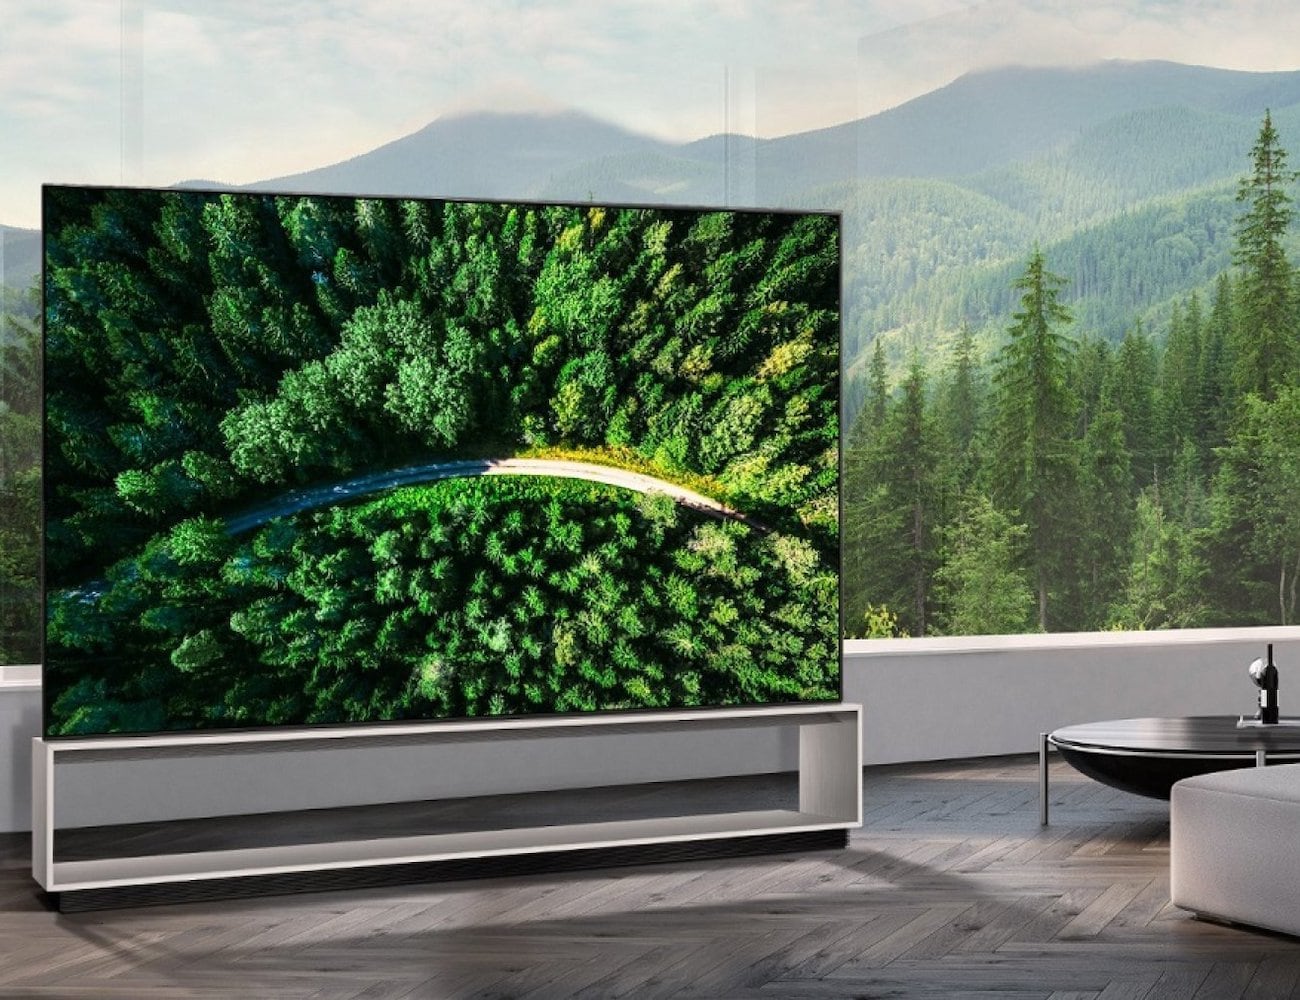 LG vs. Samsung smart tv comparison